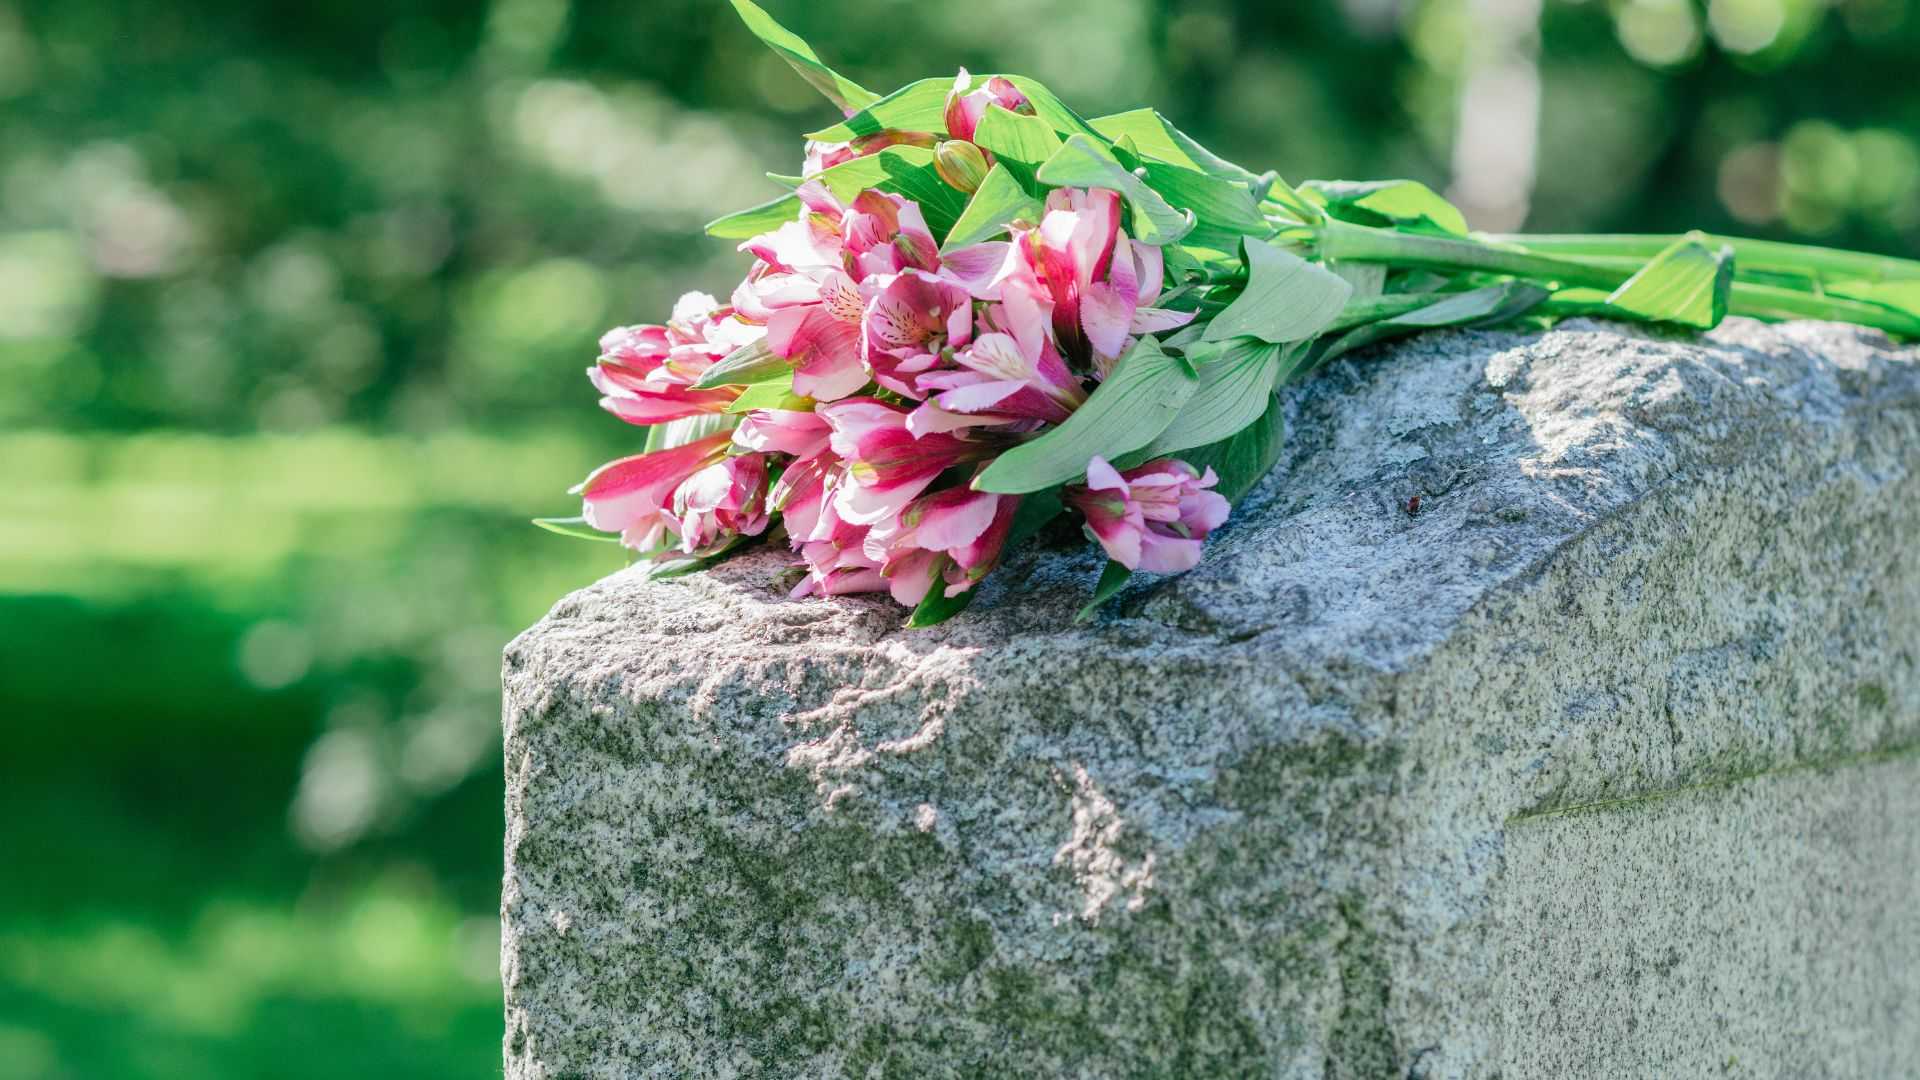 Parents put nametag for kids ahead cemetery visit for Undas season